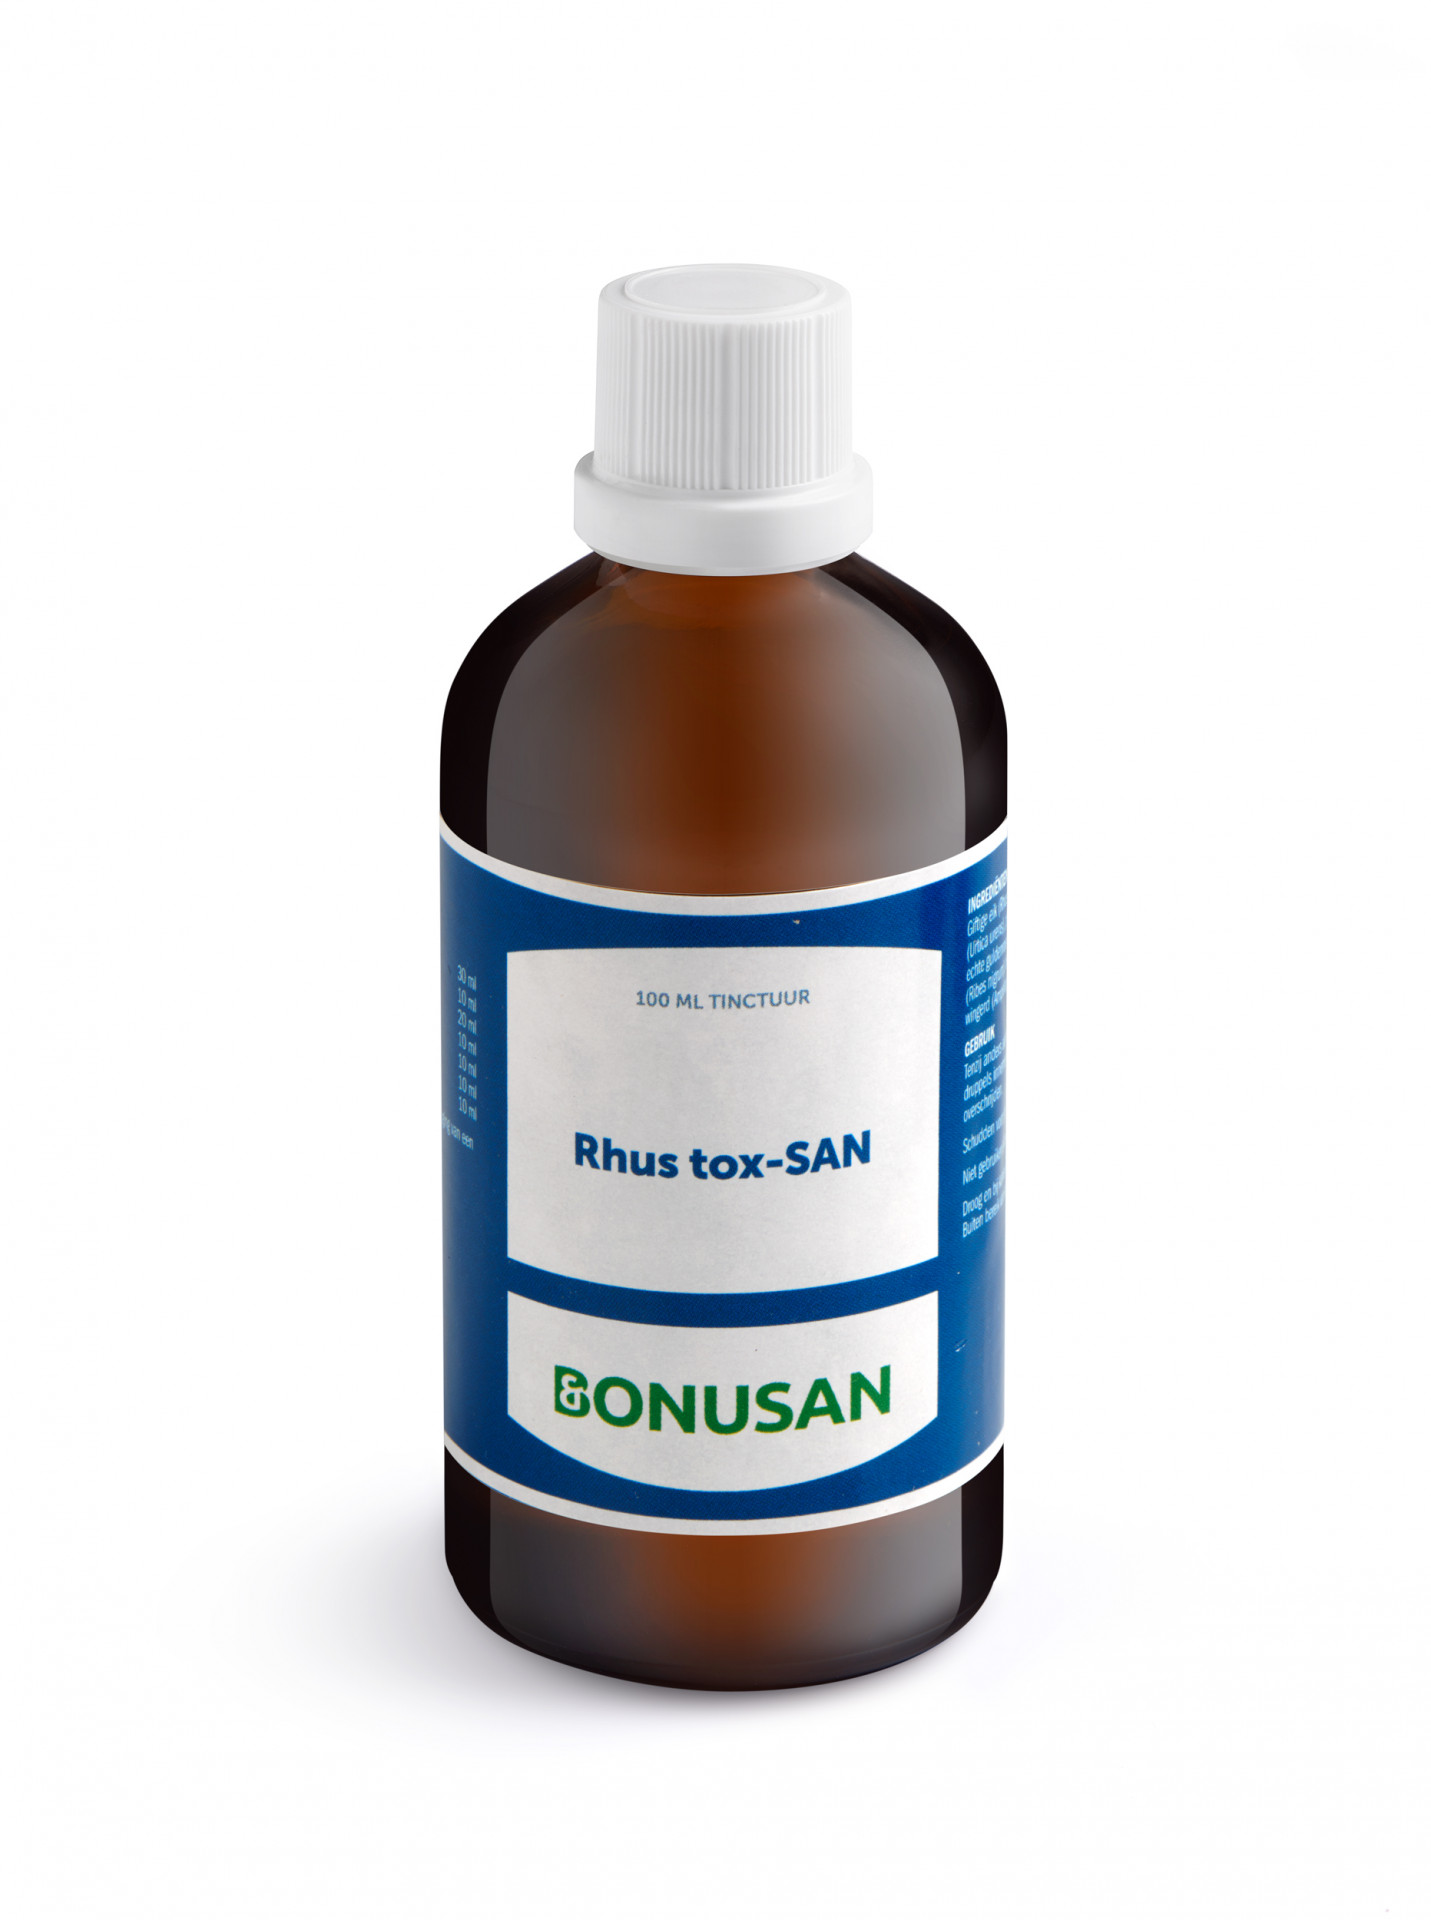 Bonusan - Rhus tox-SAN (voorheen Atrimusan)